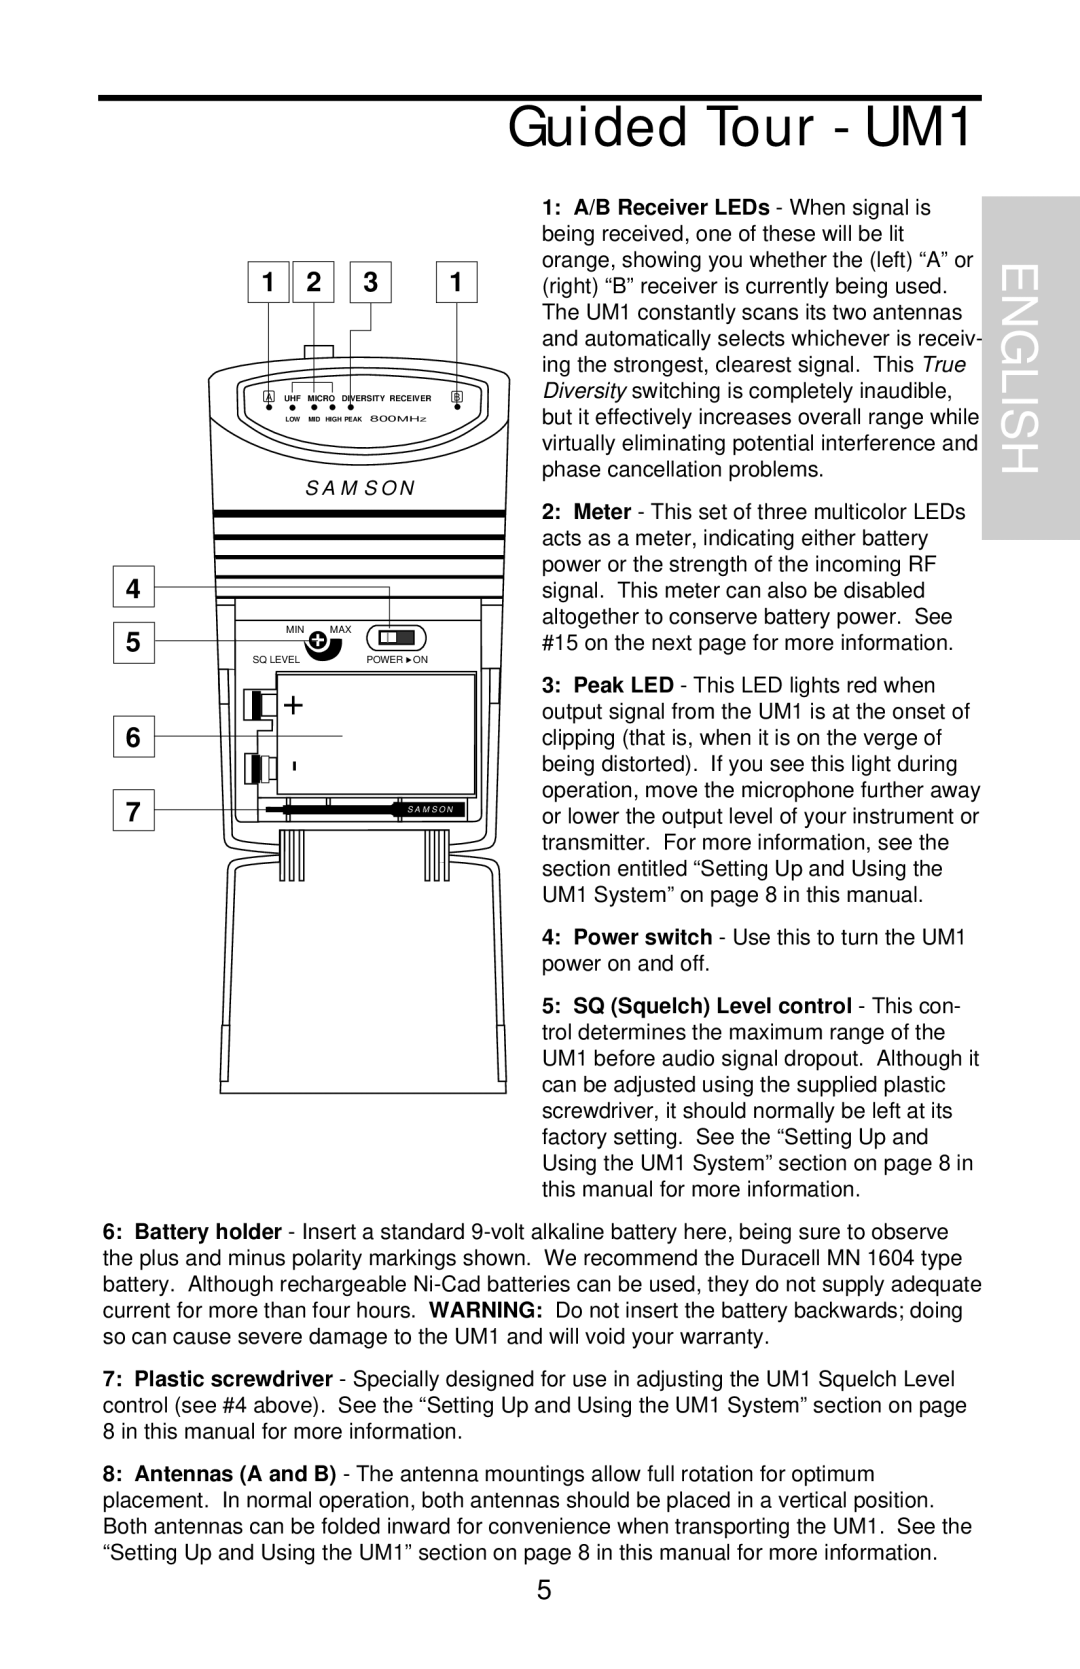 Samson UHF Series One owner manual Guided Tour - UM1, English 